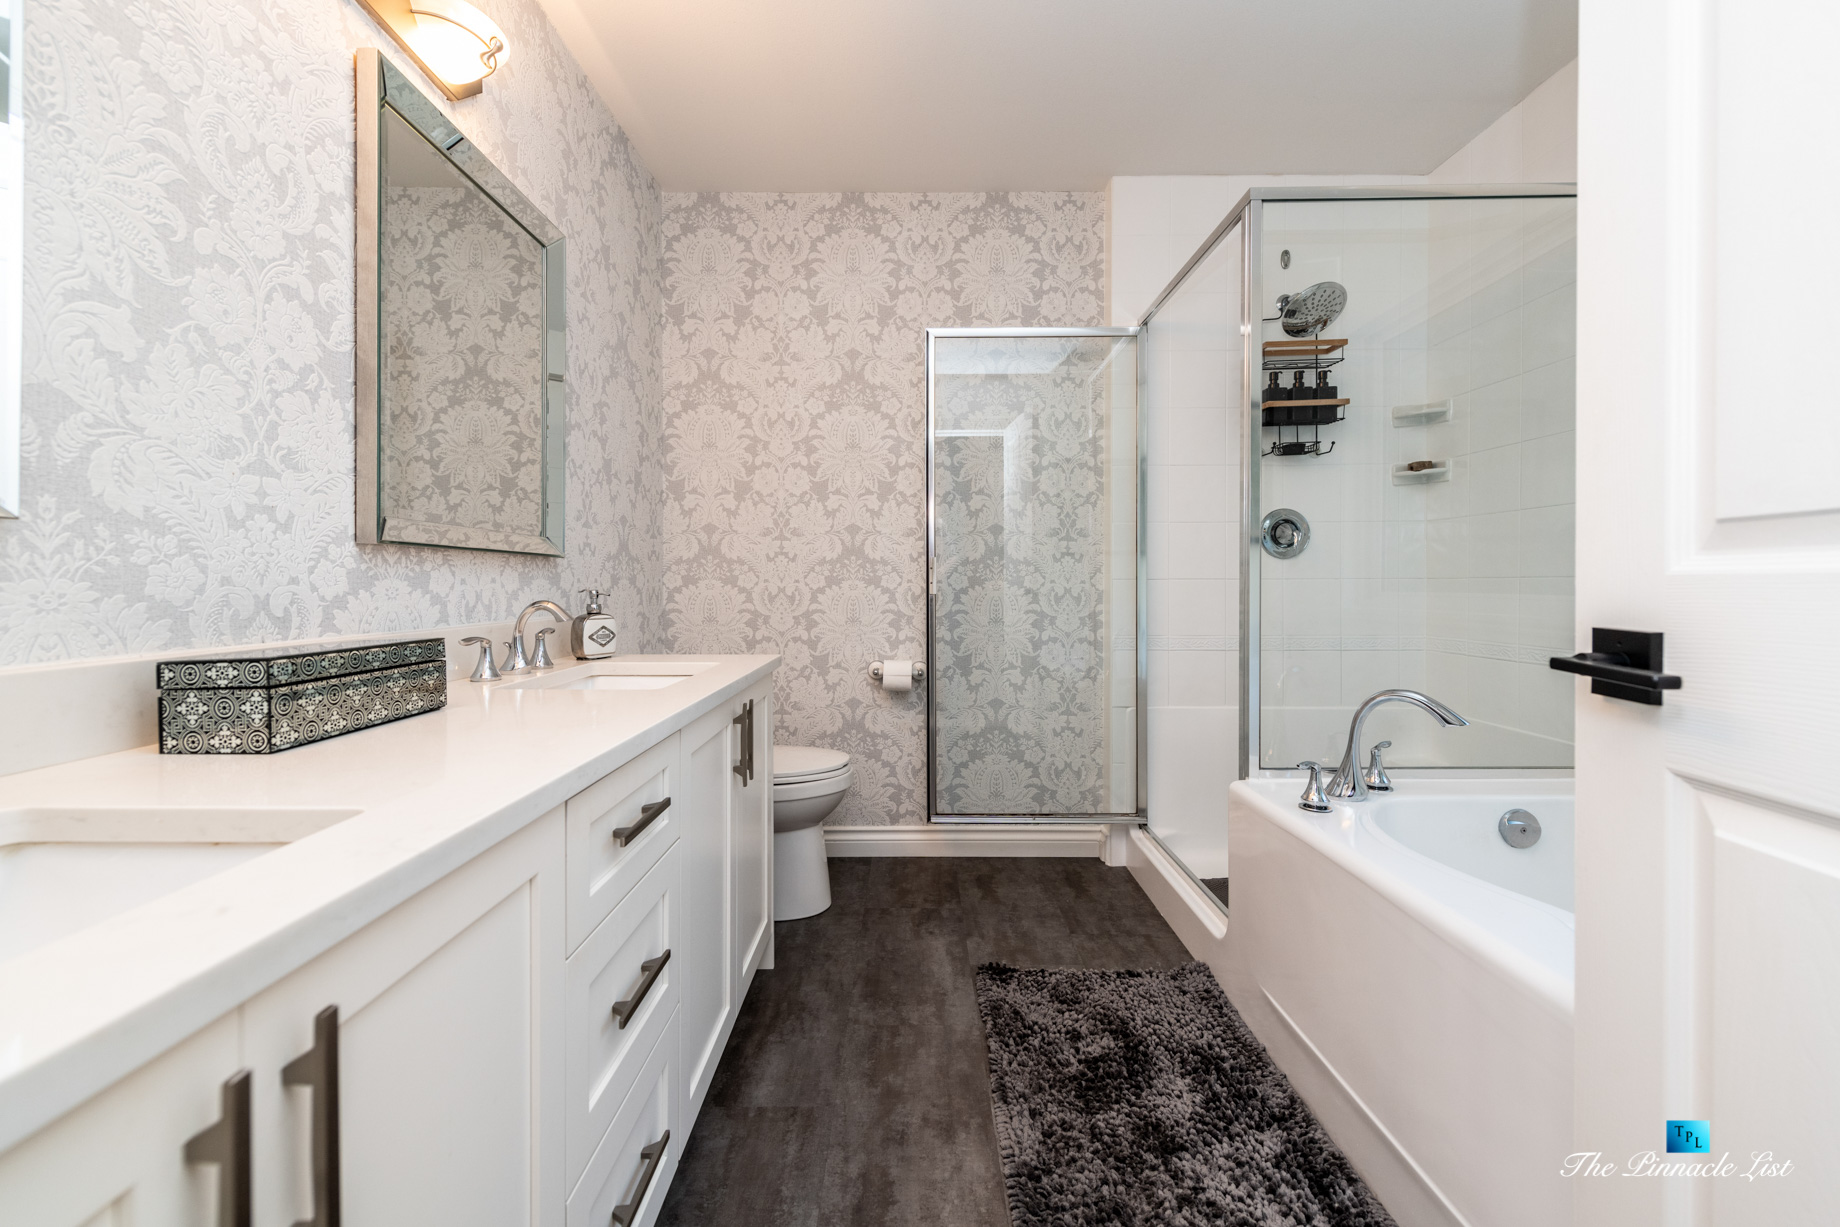 2366 Sunnyside Rd, Anmore, BC, Canada - Master Bathroom